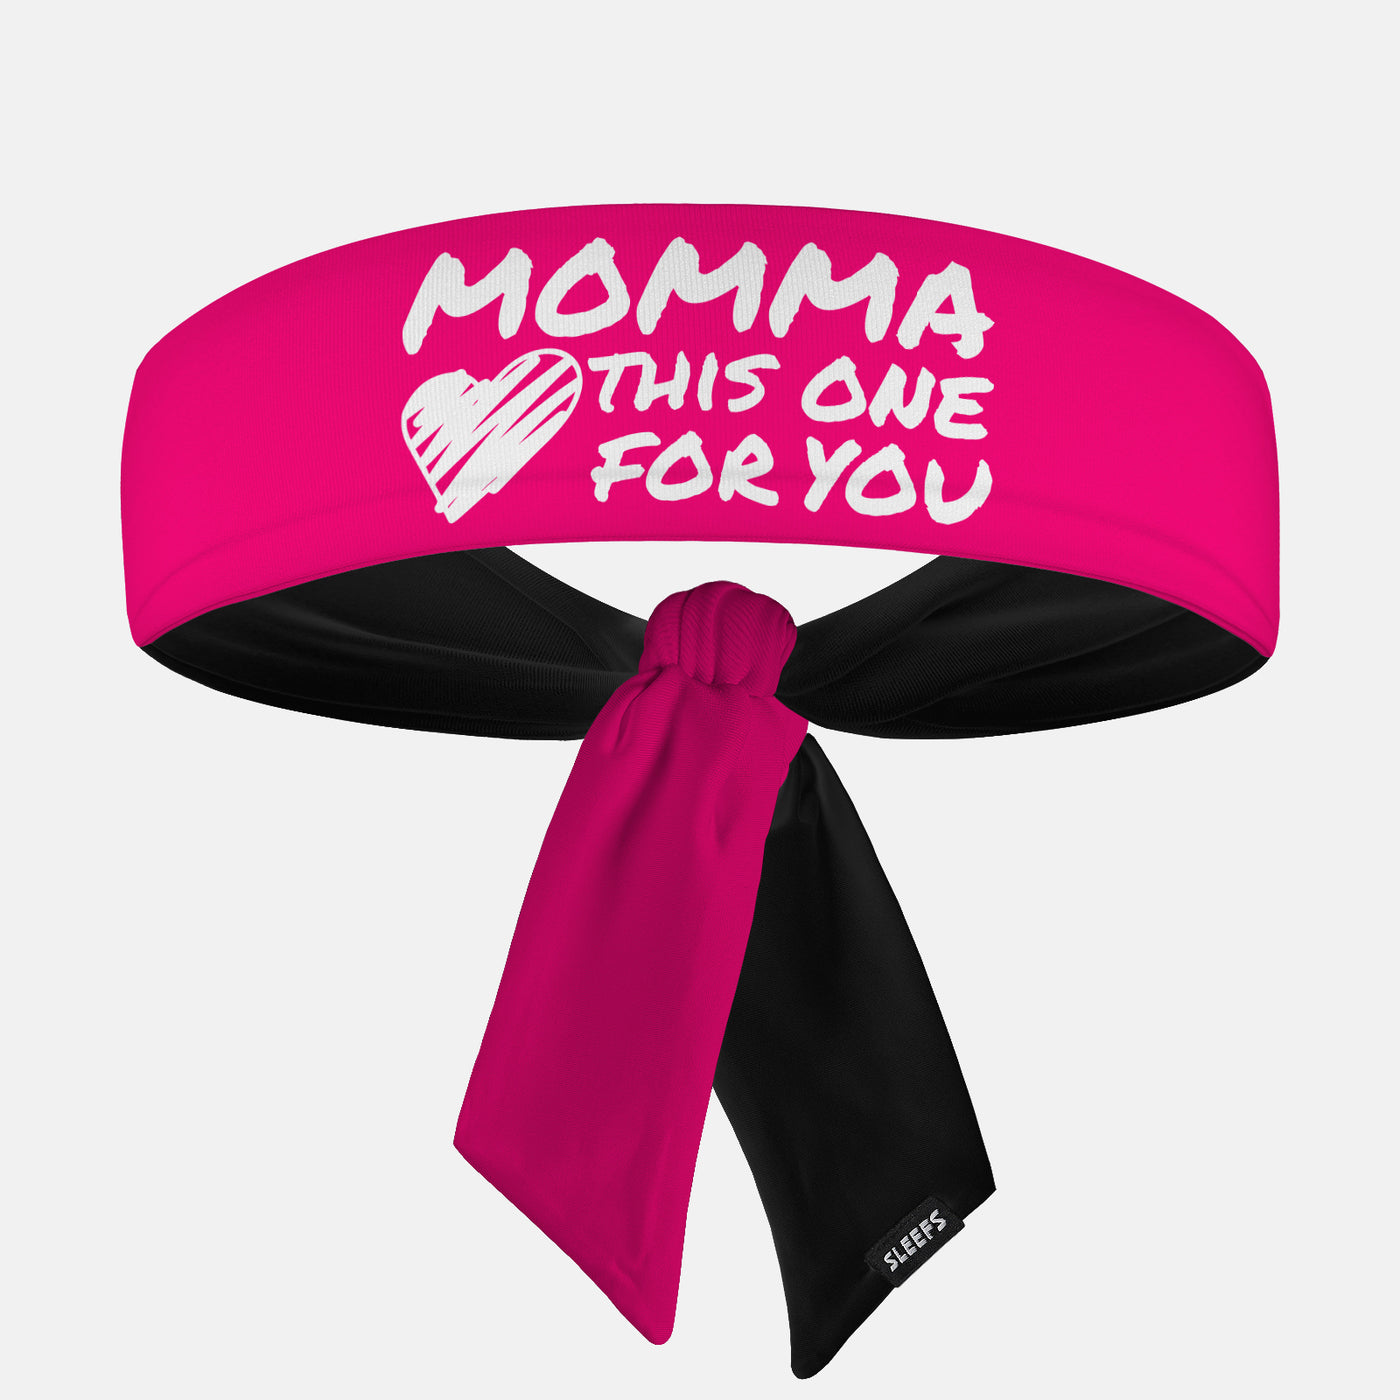 Momma Pink Ninja Headband